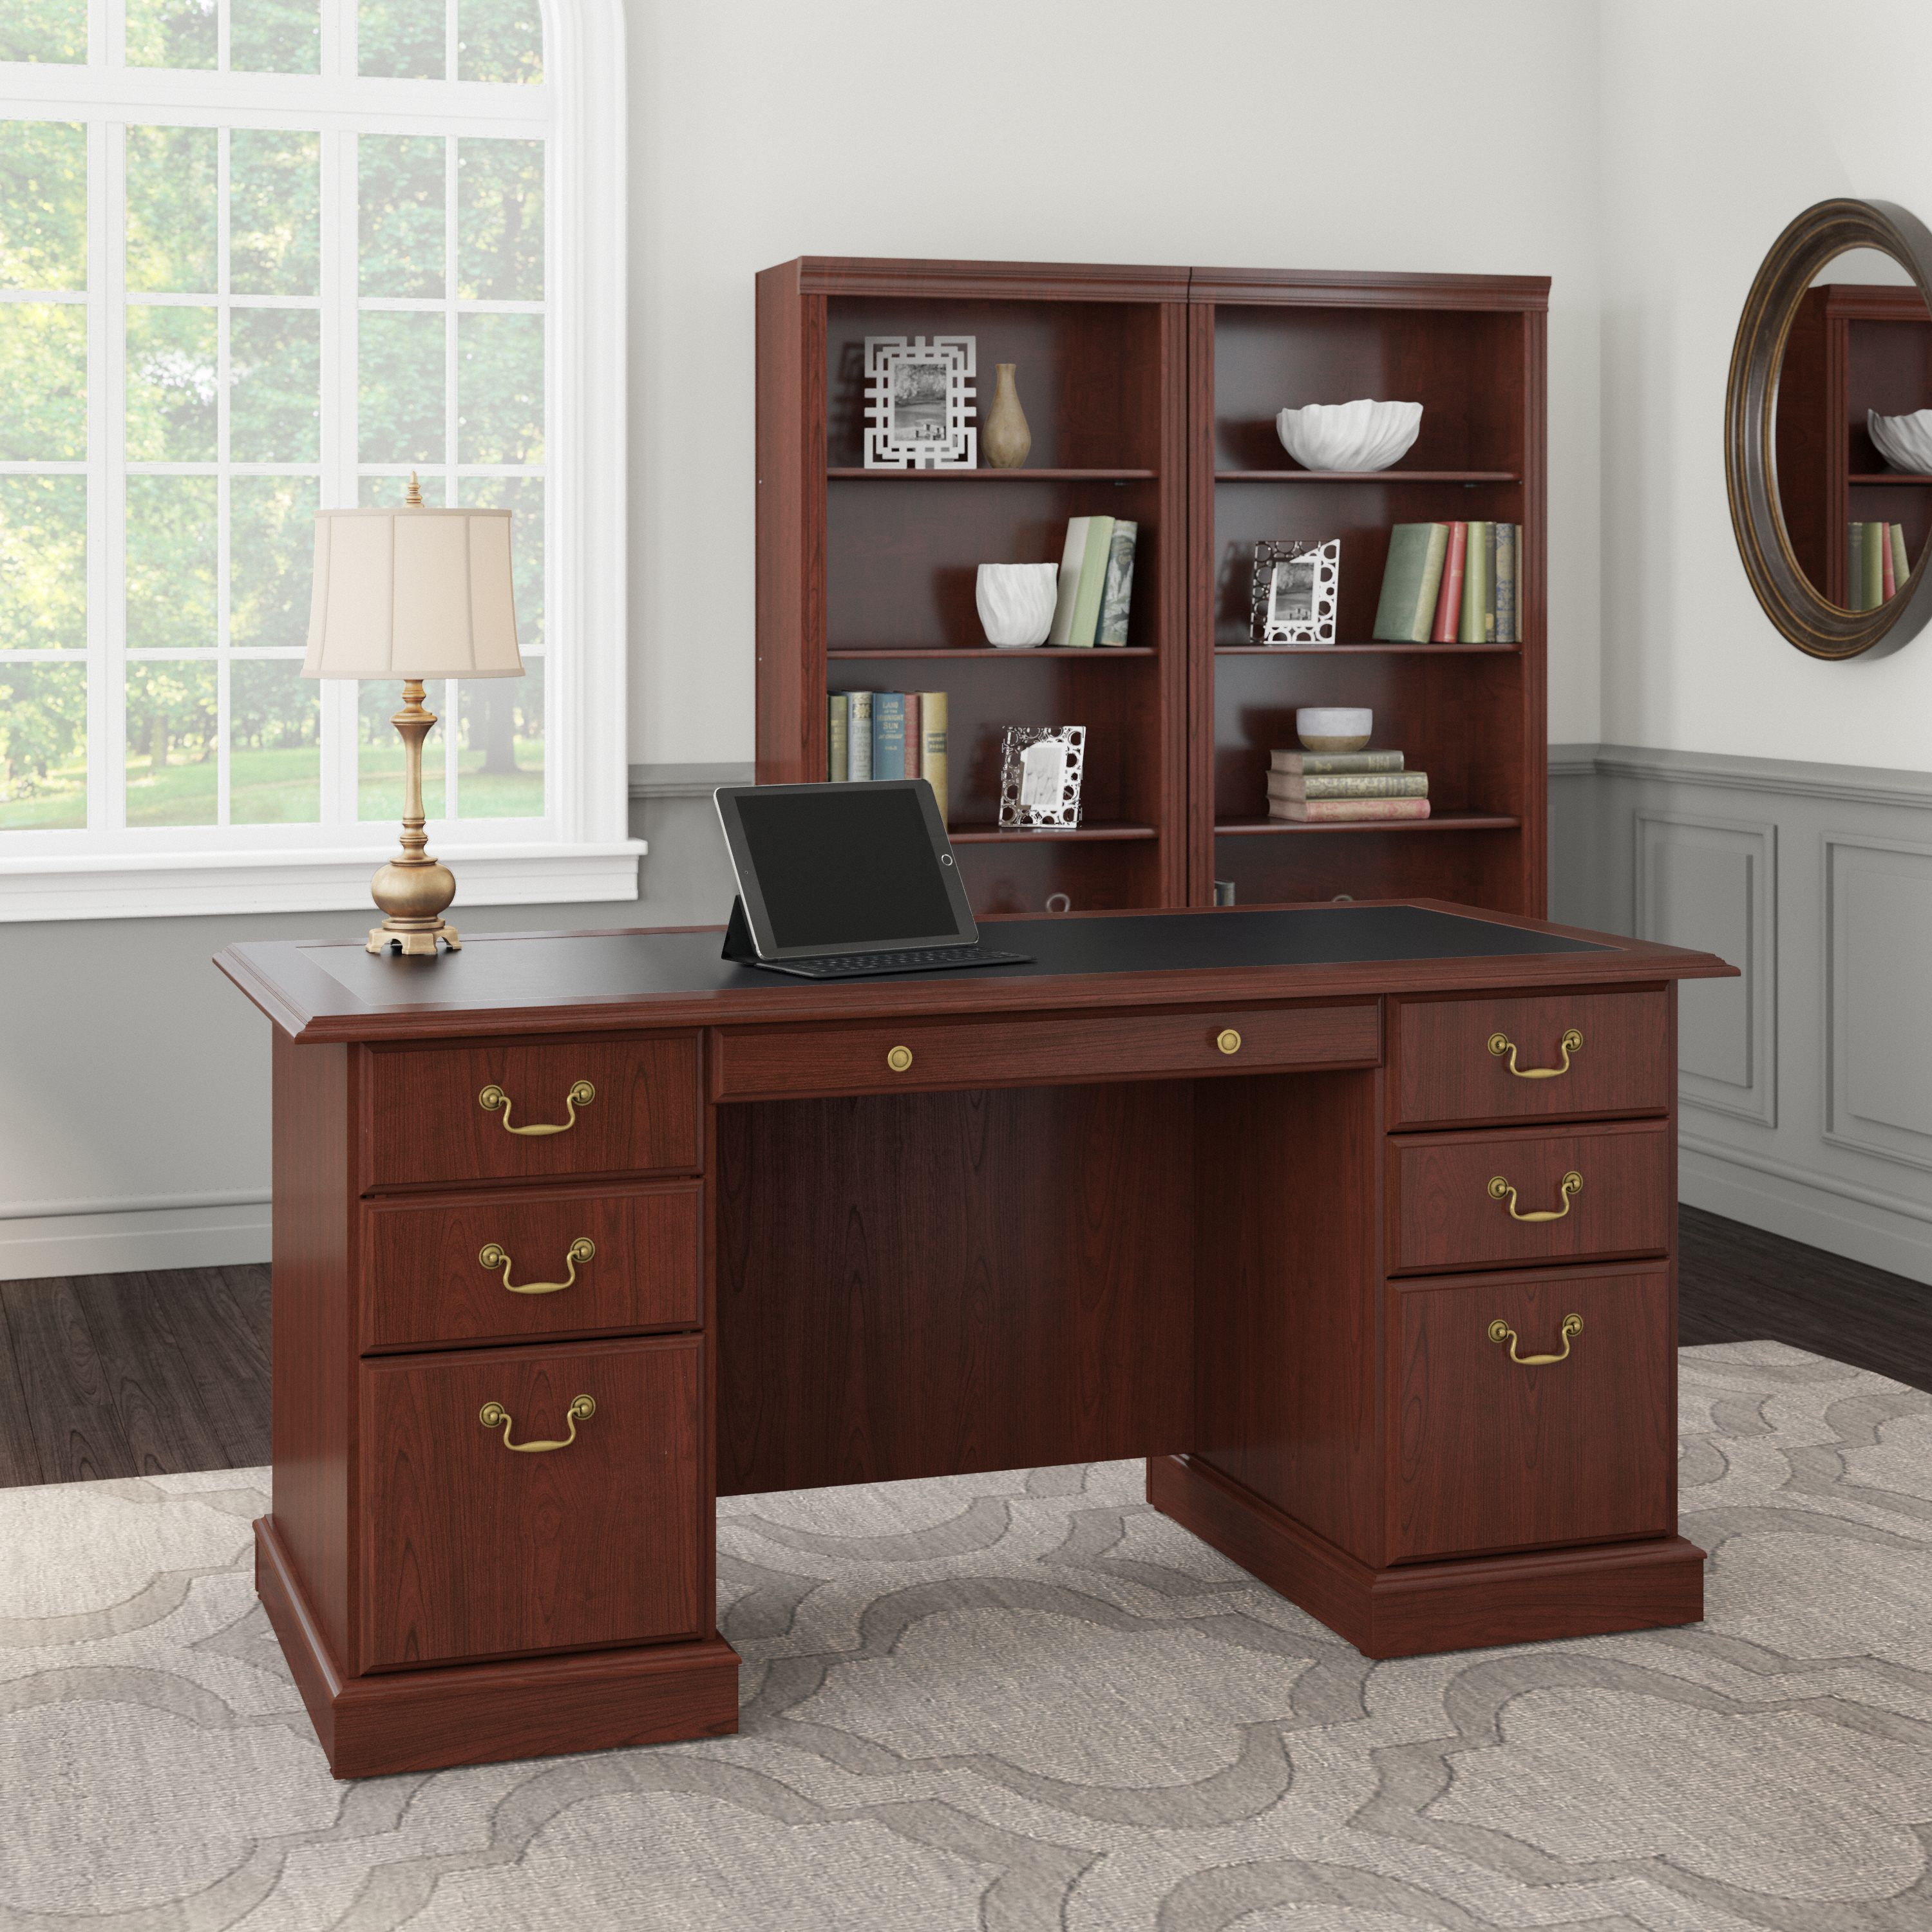 Shop Bush Furniture Saratoga Executive Desk and Bookcase Set 01 SAR003CS #color_harvest cherry